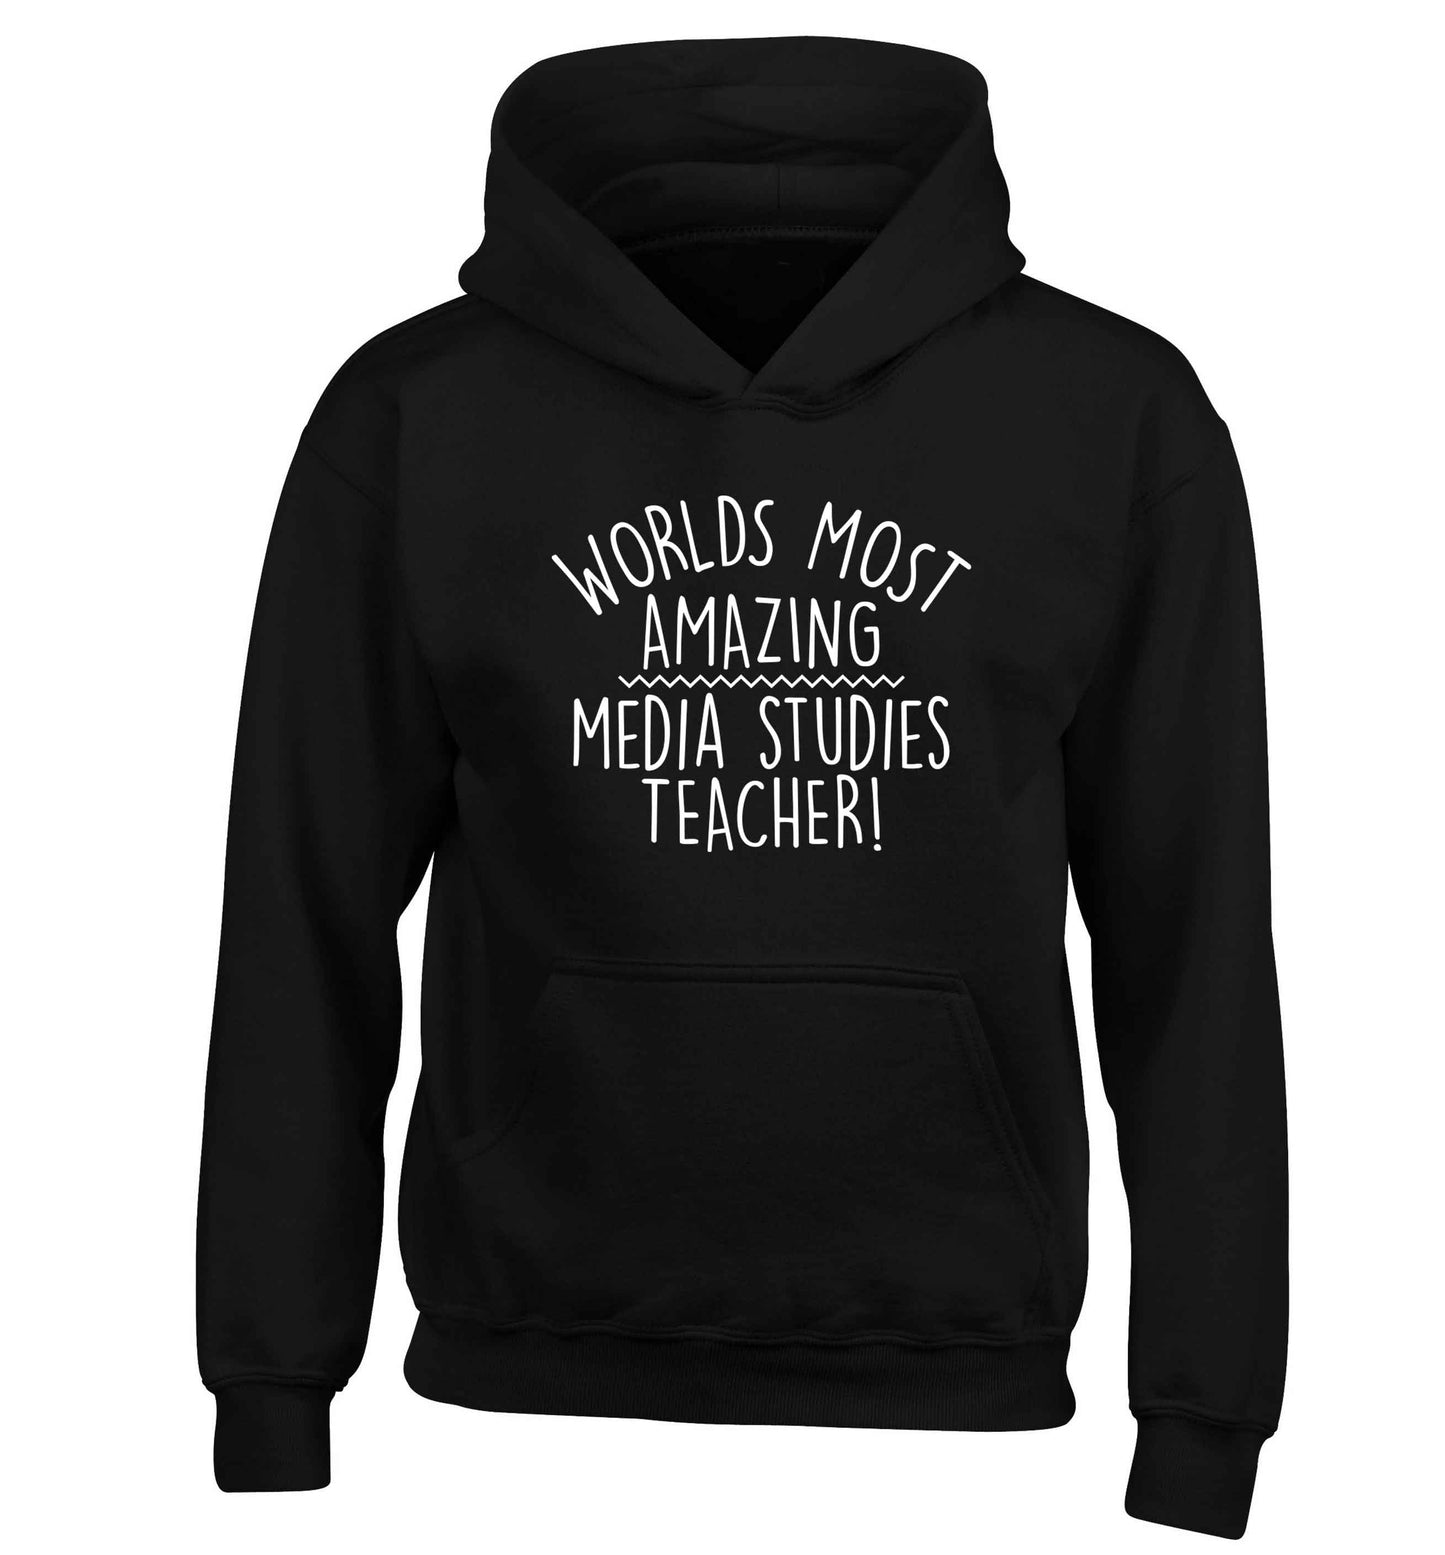 Worlds most amazing media studies teacher children's black hoodie 12-13 Years